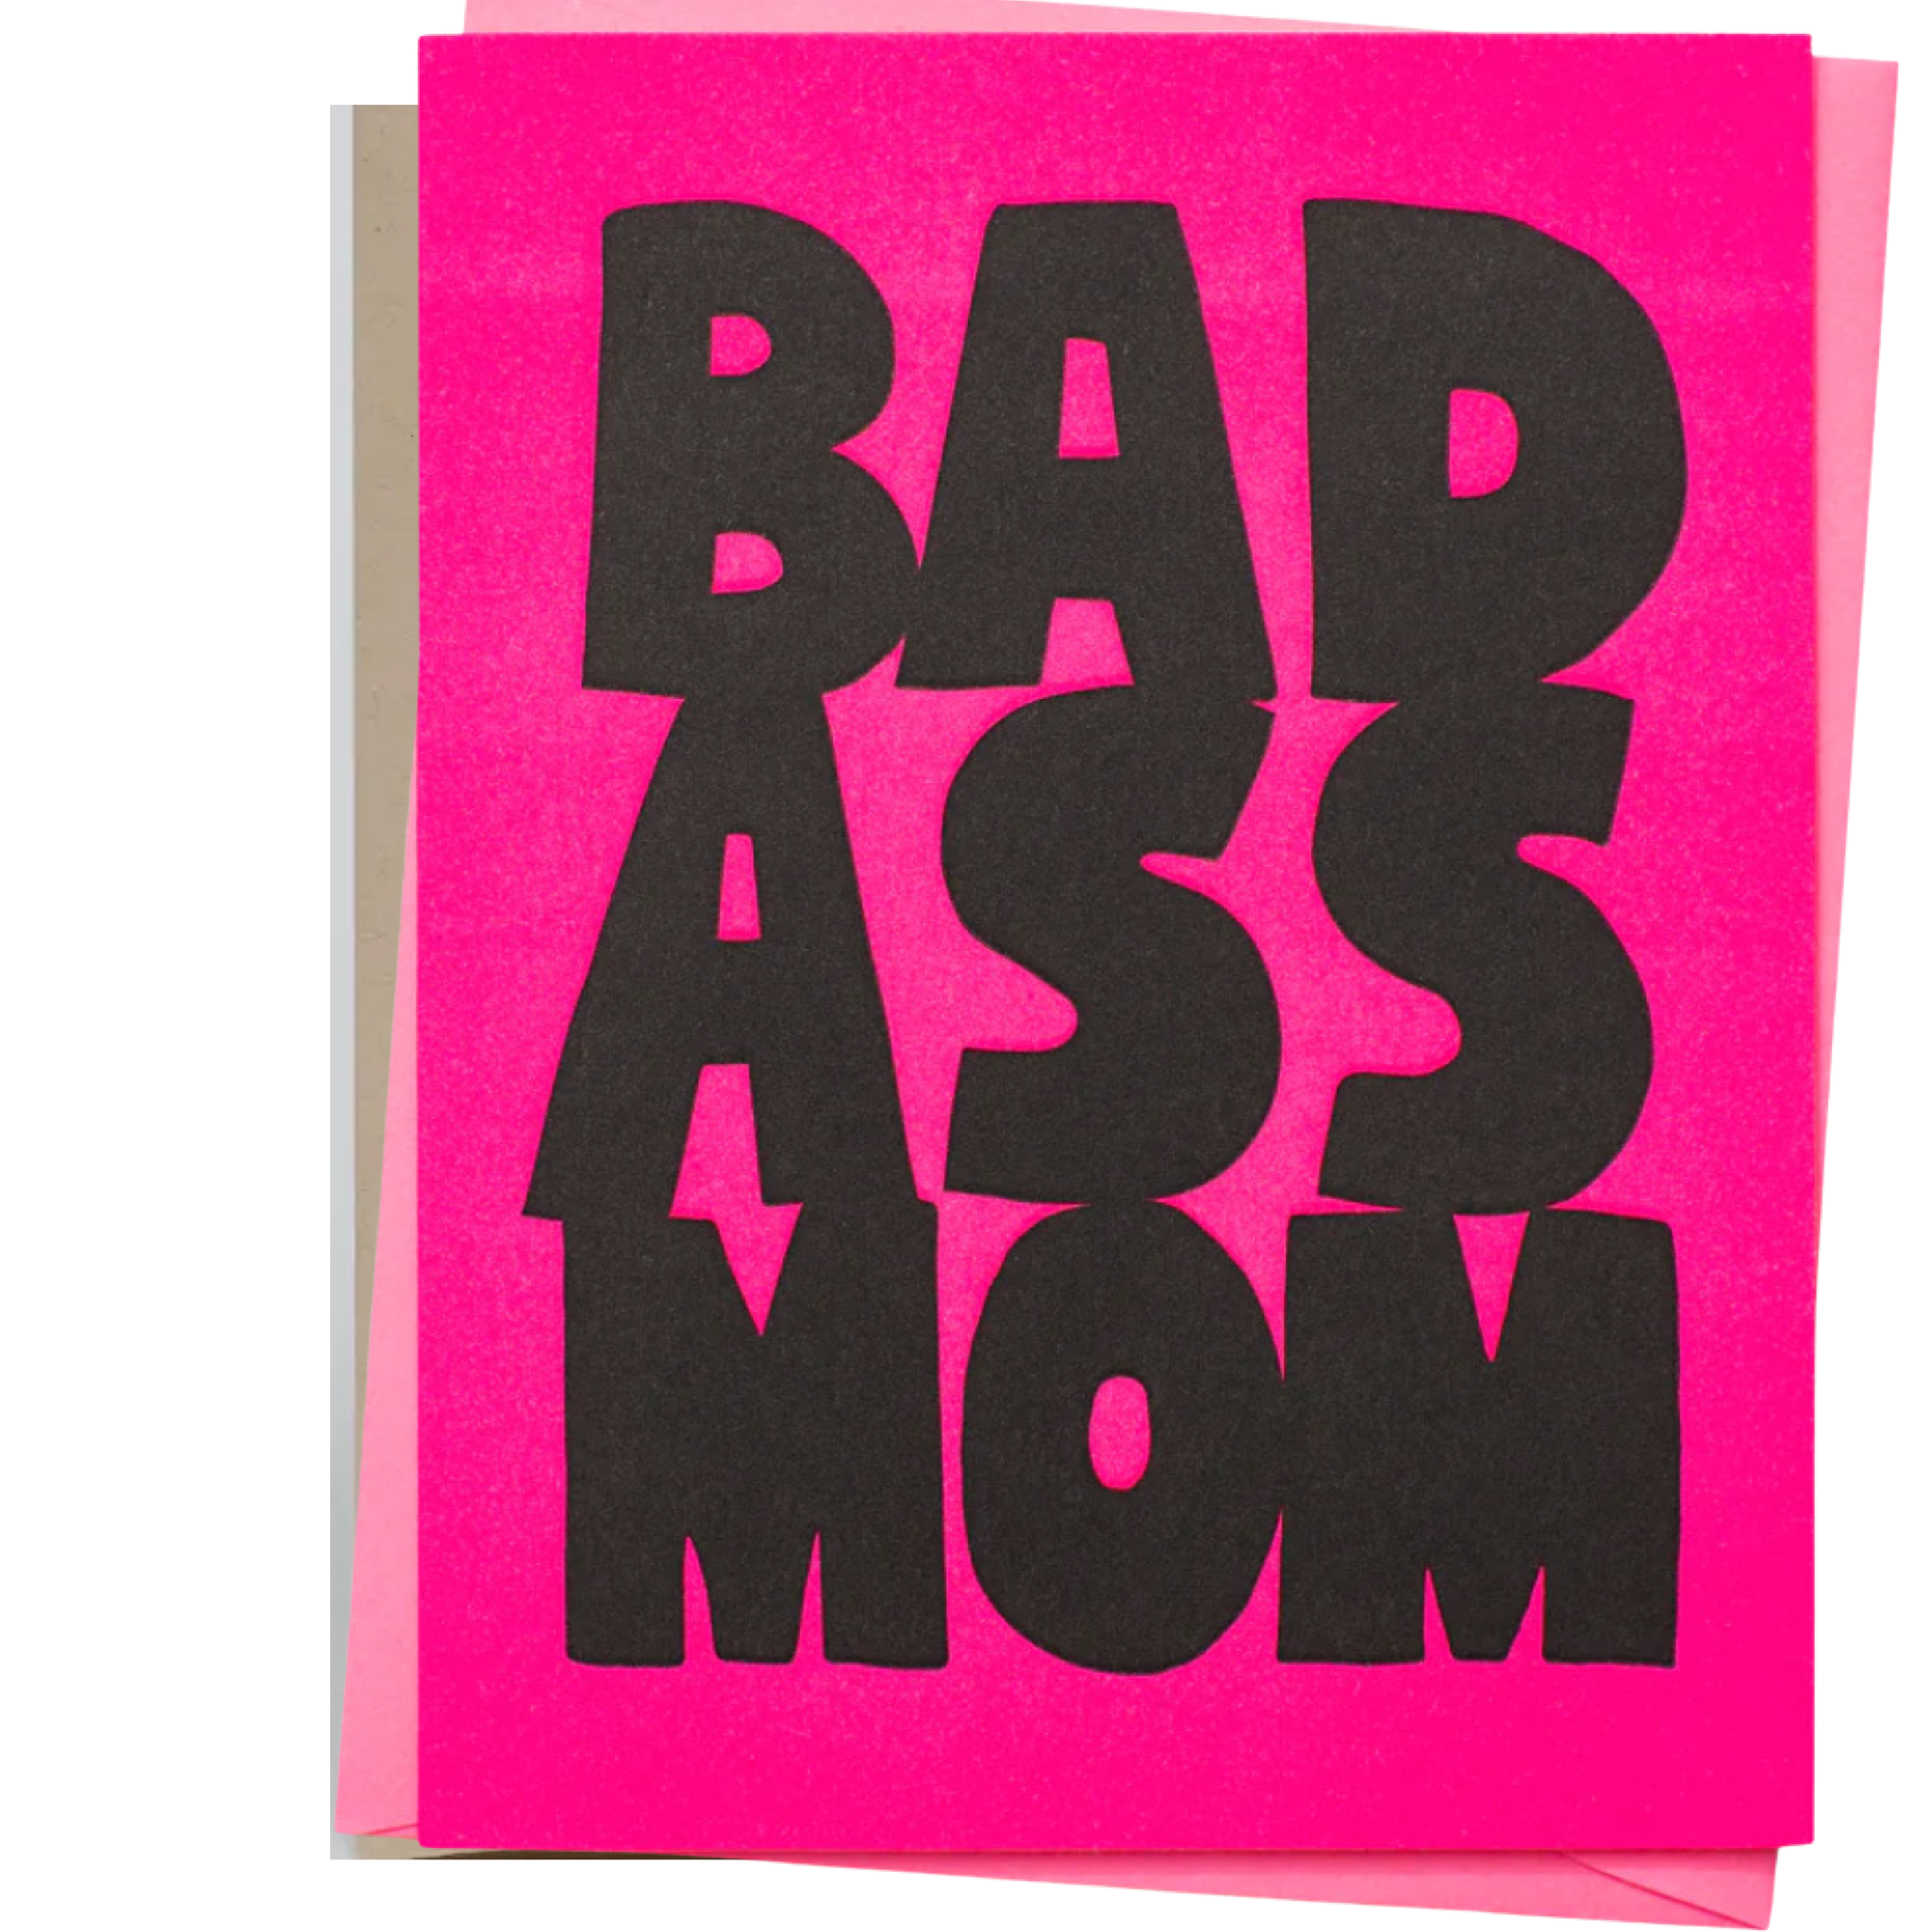 Bad ass mom greeting card